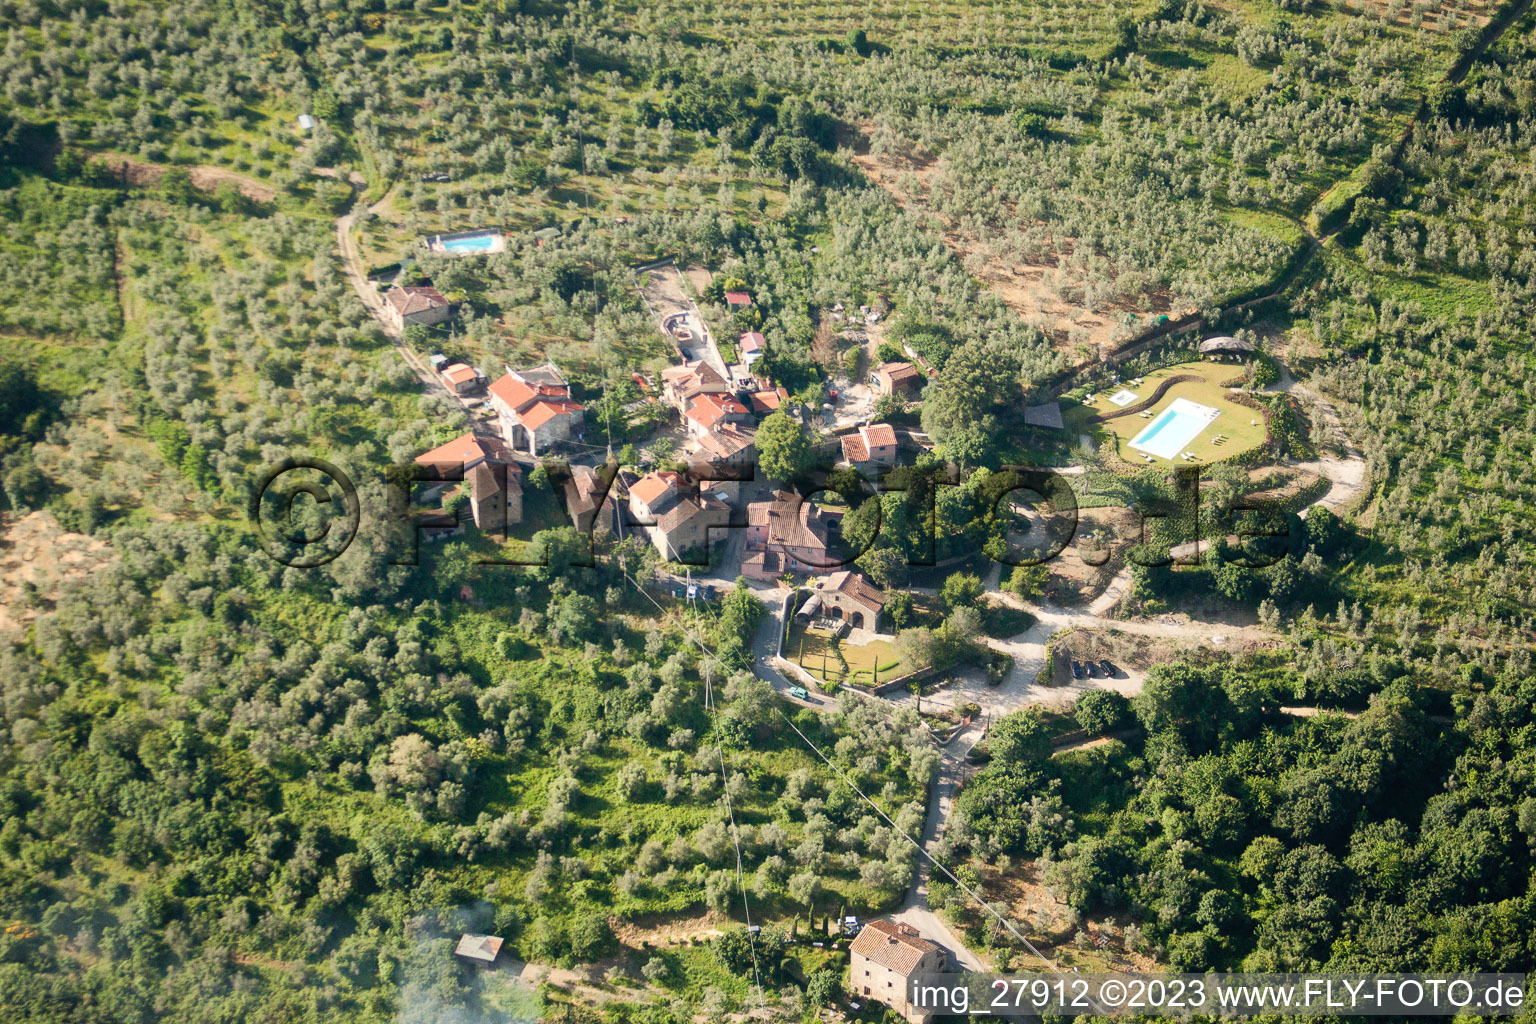 Luftbild von Santa Cristina im Bundesland Toscana, Italien